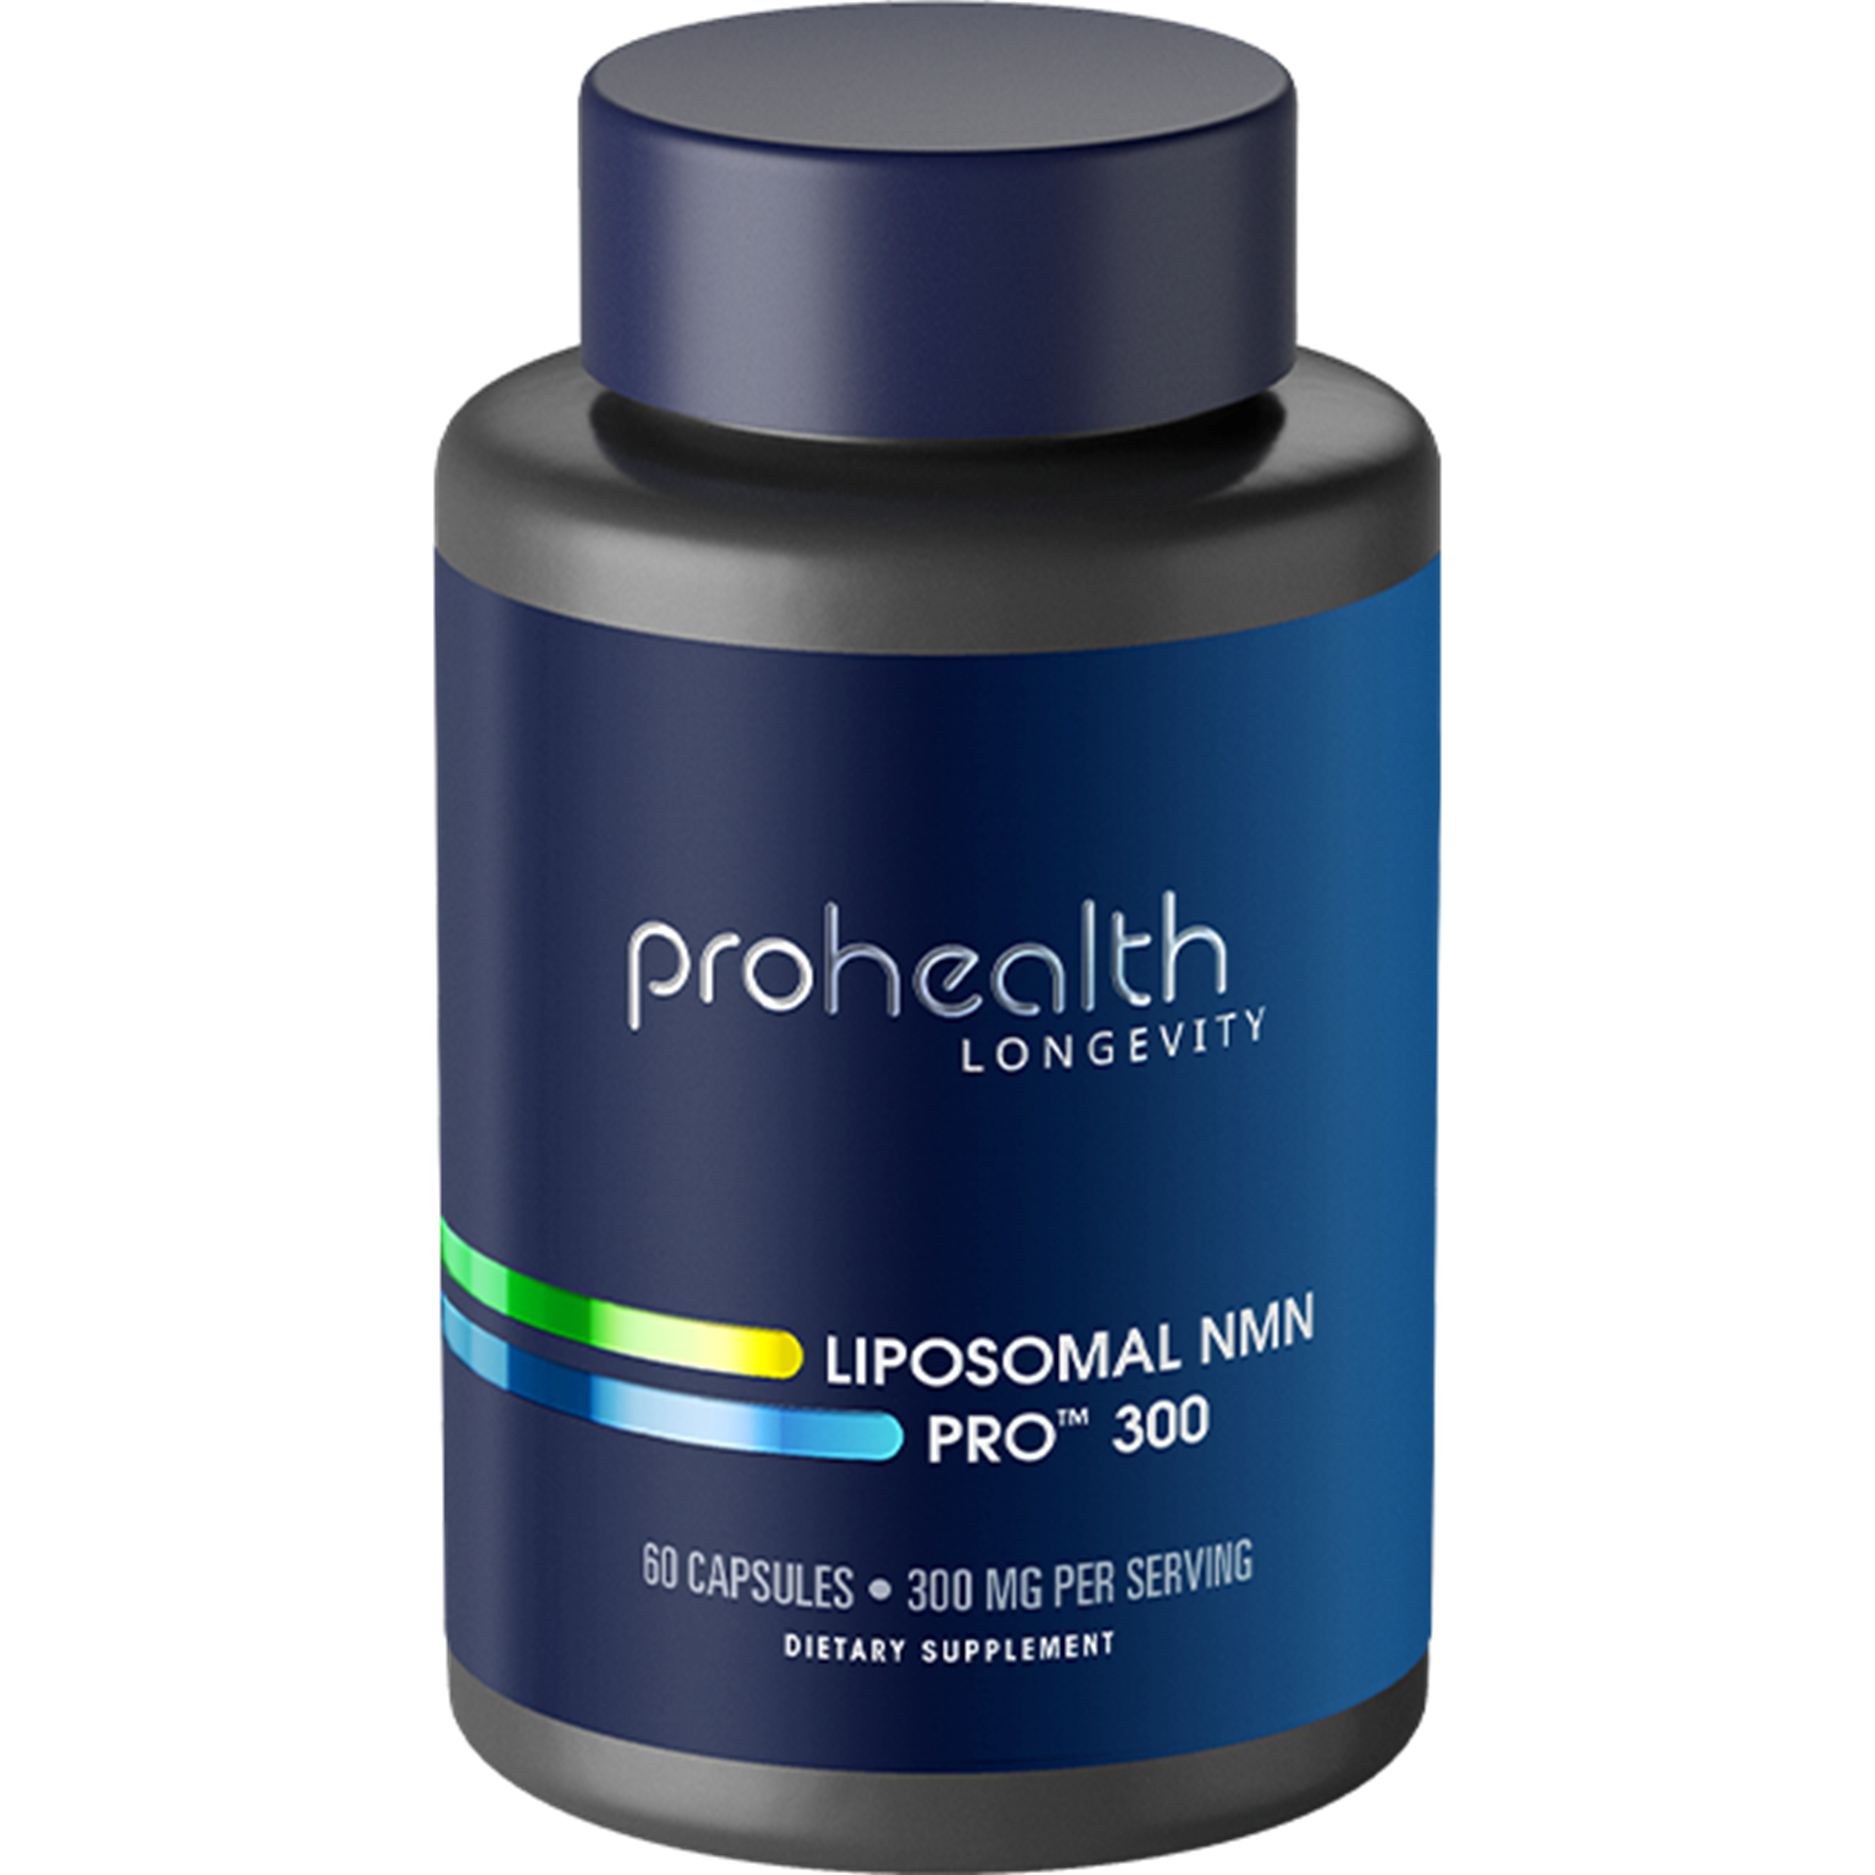 Liposomal NMN Pro 300™ - Lipo Uthever® NMN, Trans-Resveratrol, TMG, 60 capsules